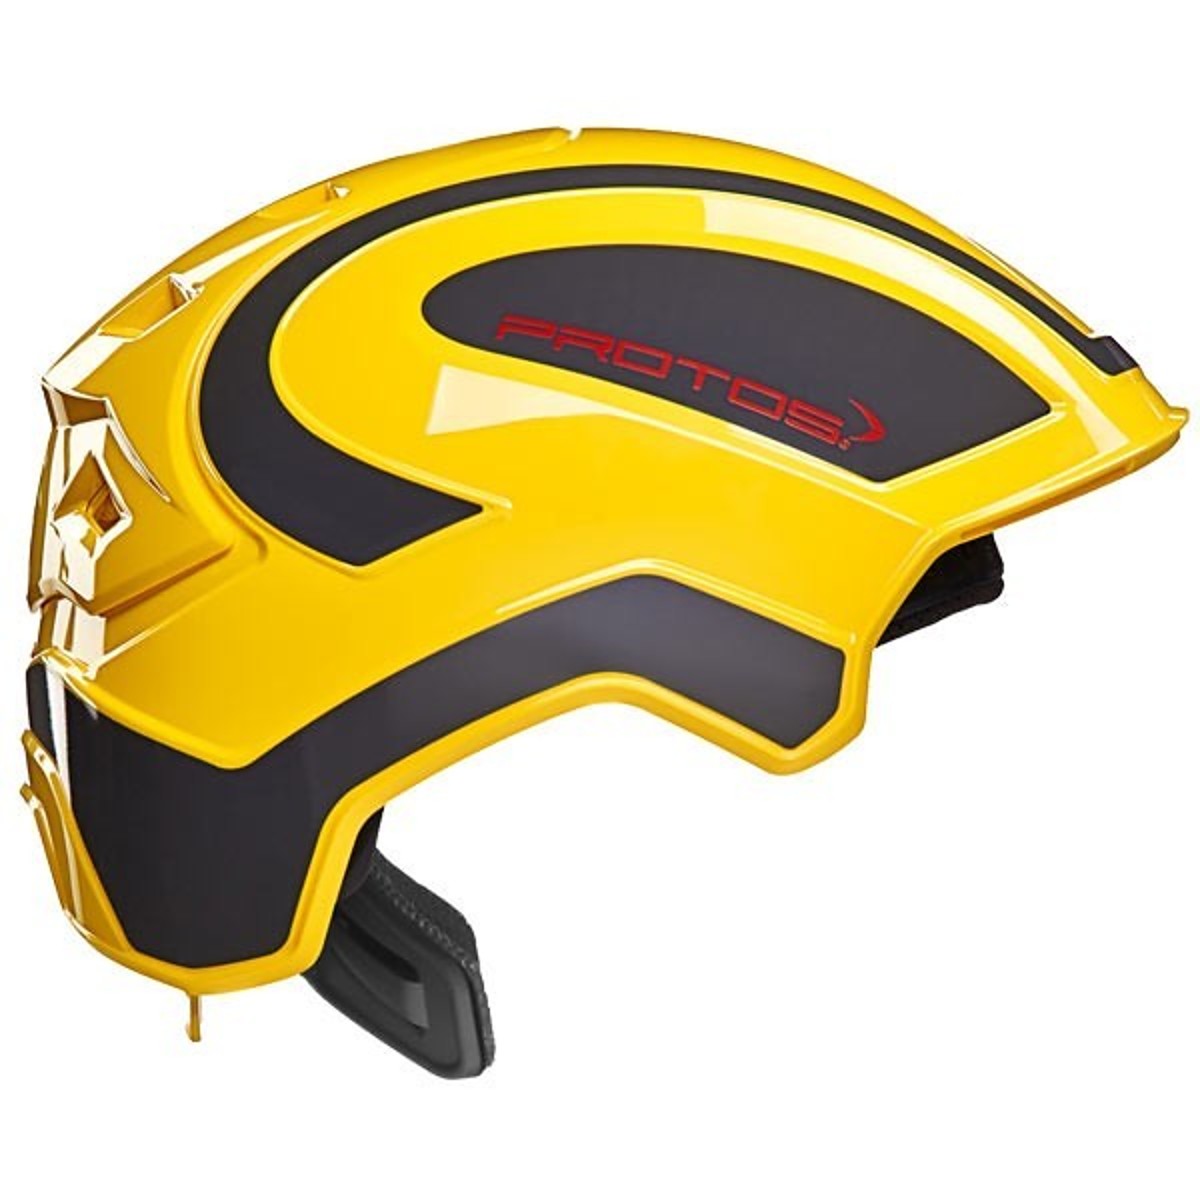 Protos helm maximale bescherming